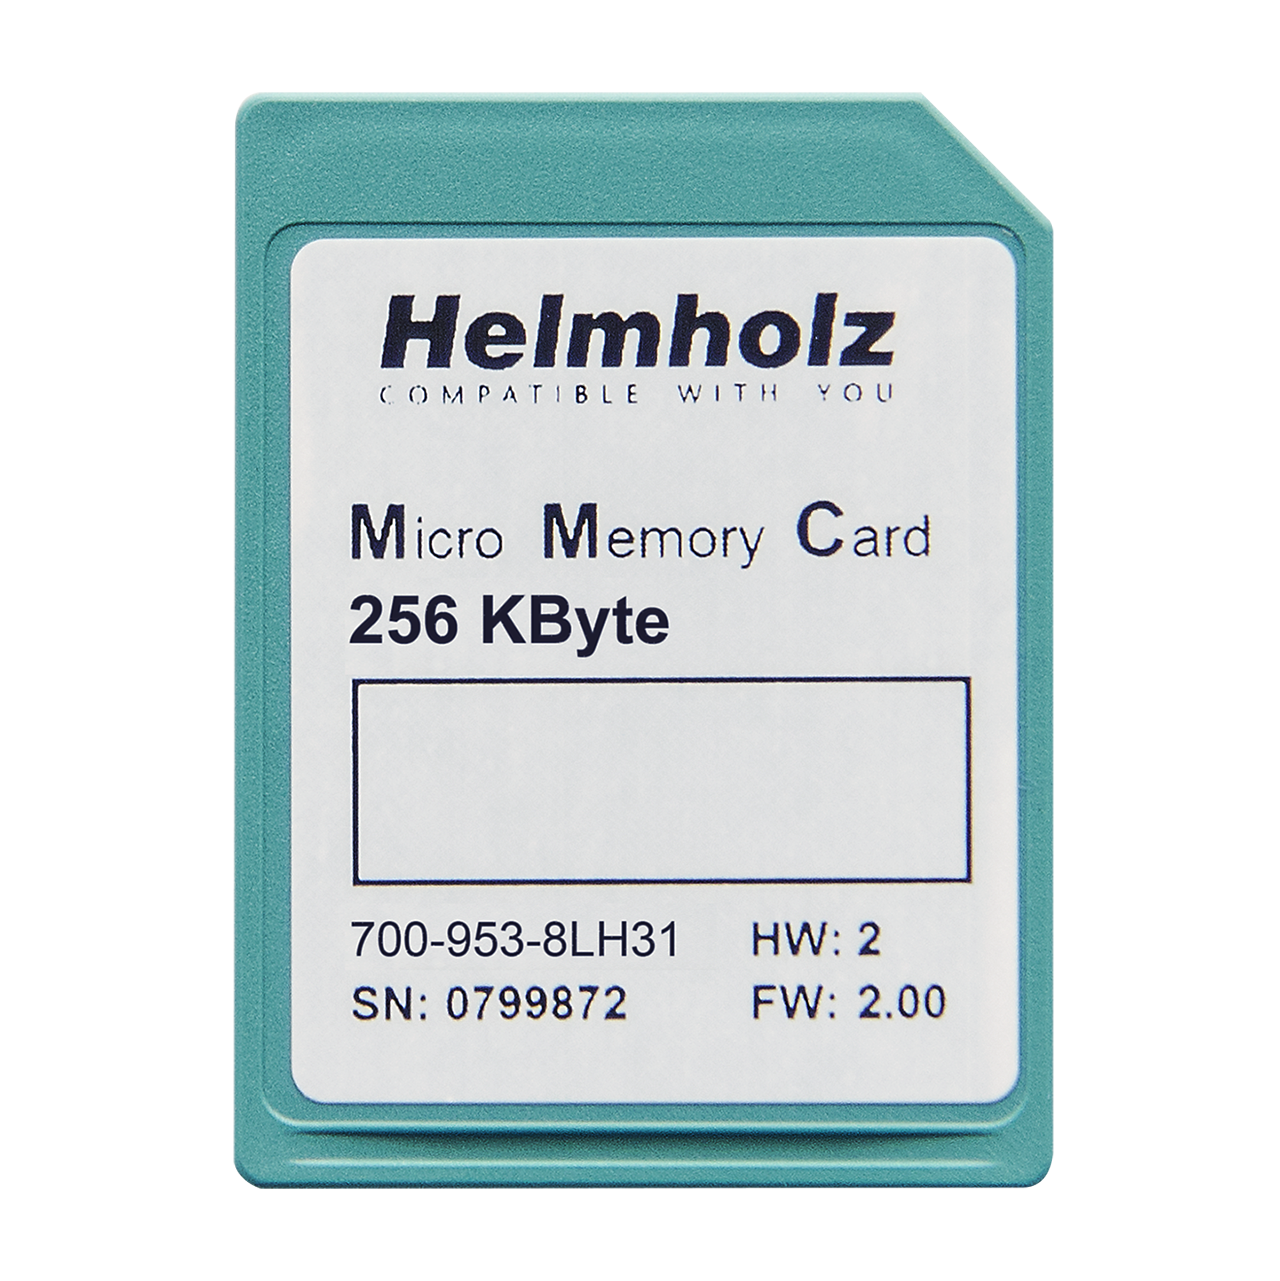 Helmholz Micro Tarjeta de Memoria, 256 kByte 700-953-8LH31